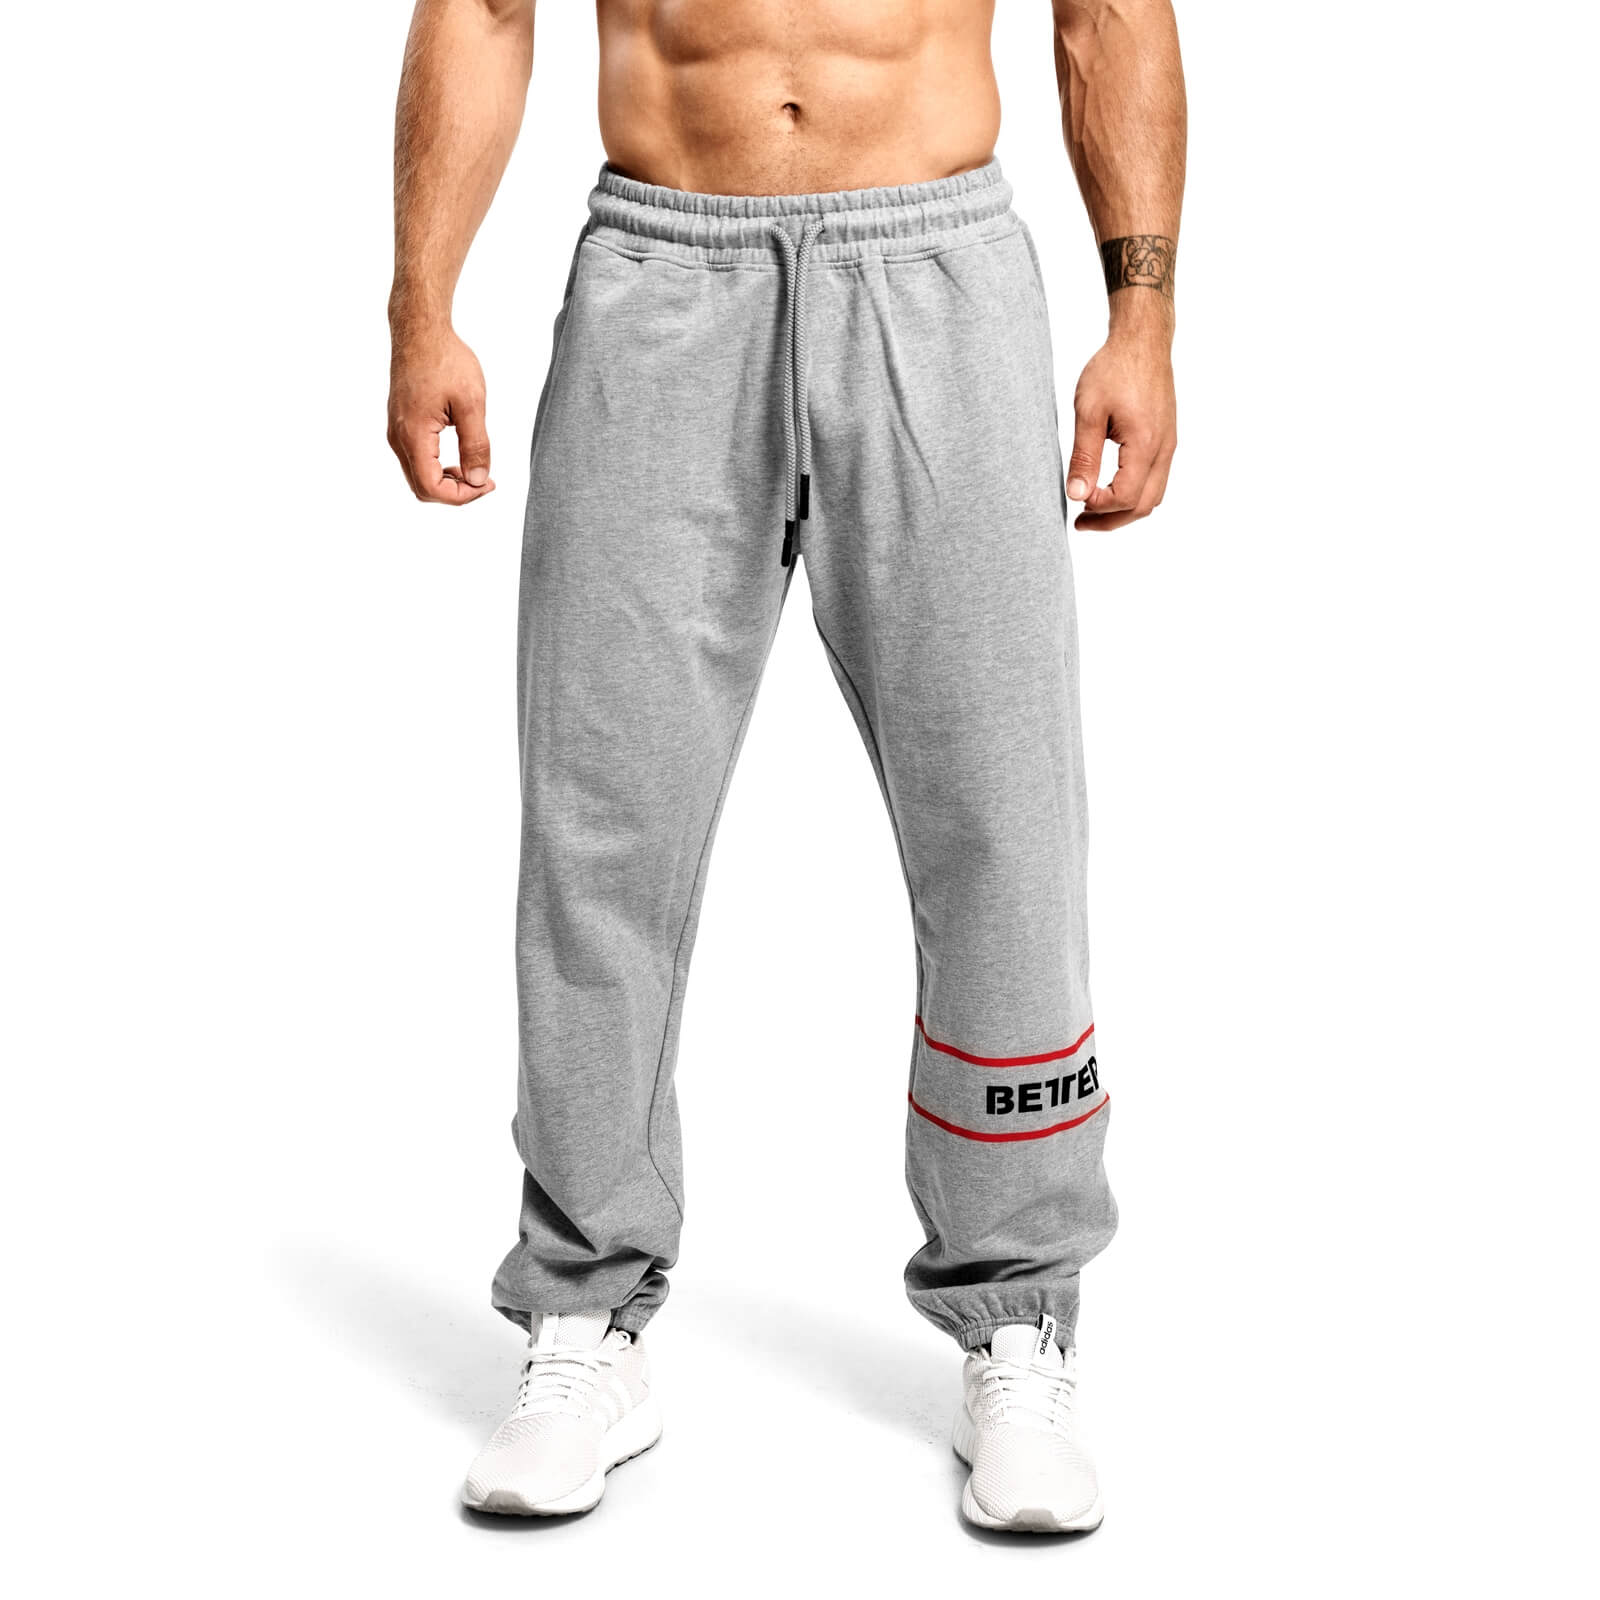 Sjekke Tribeca Sweat Pants, grey melange, Better Bodies hos SportGymButikken.no